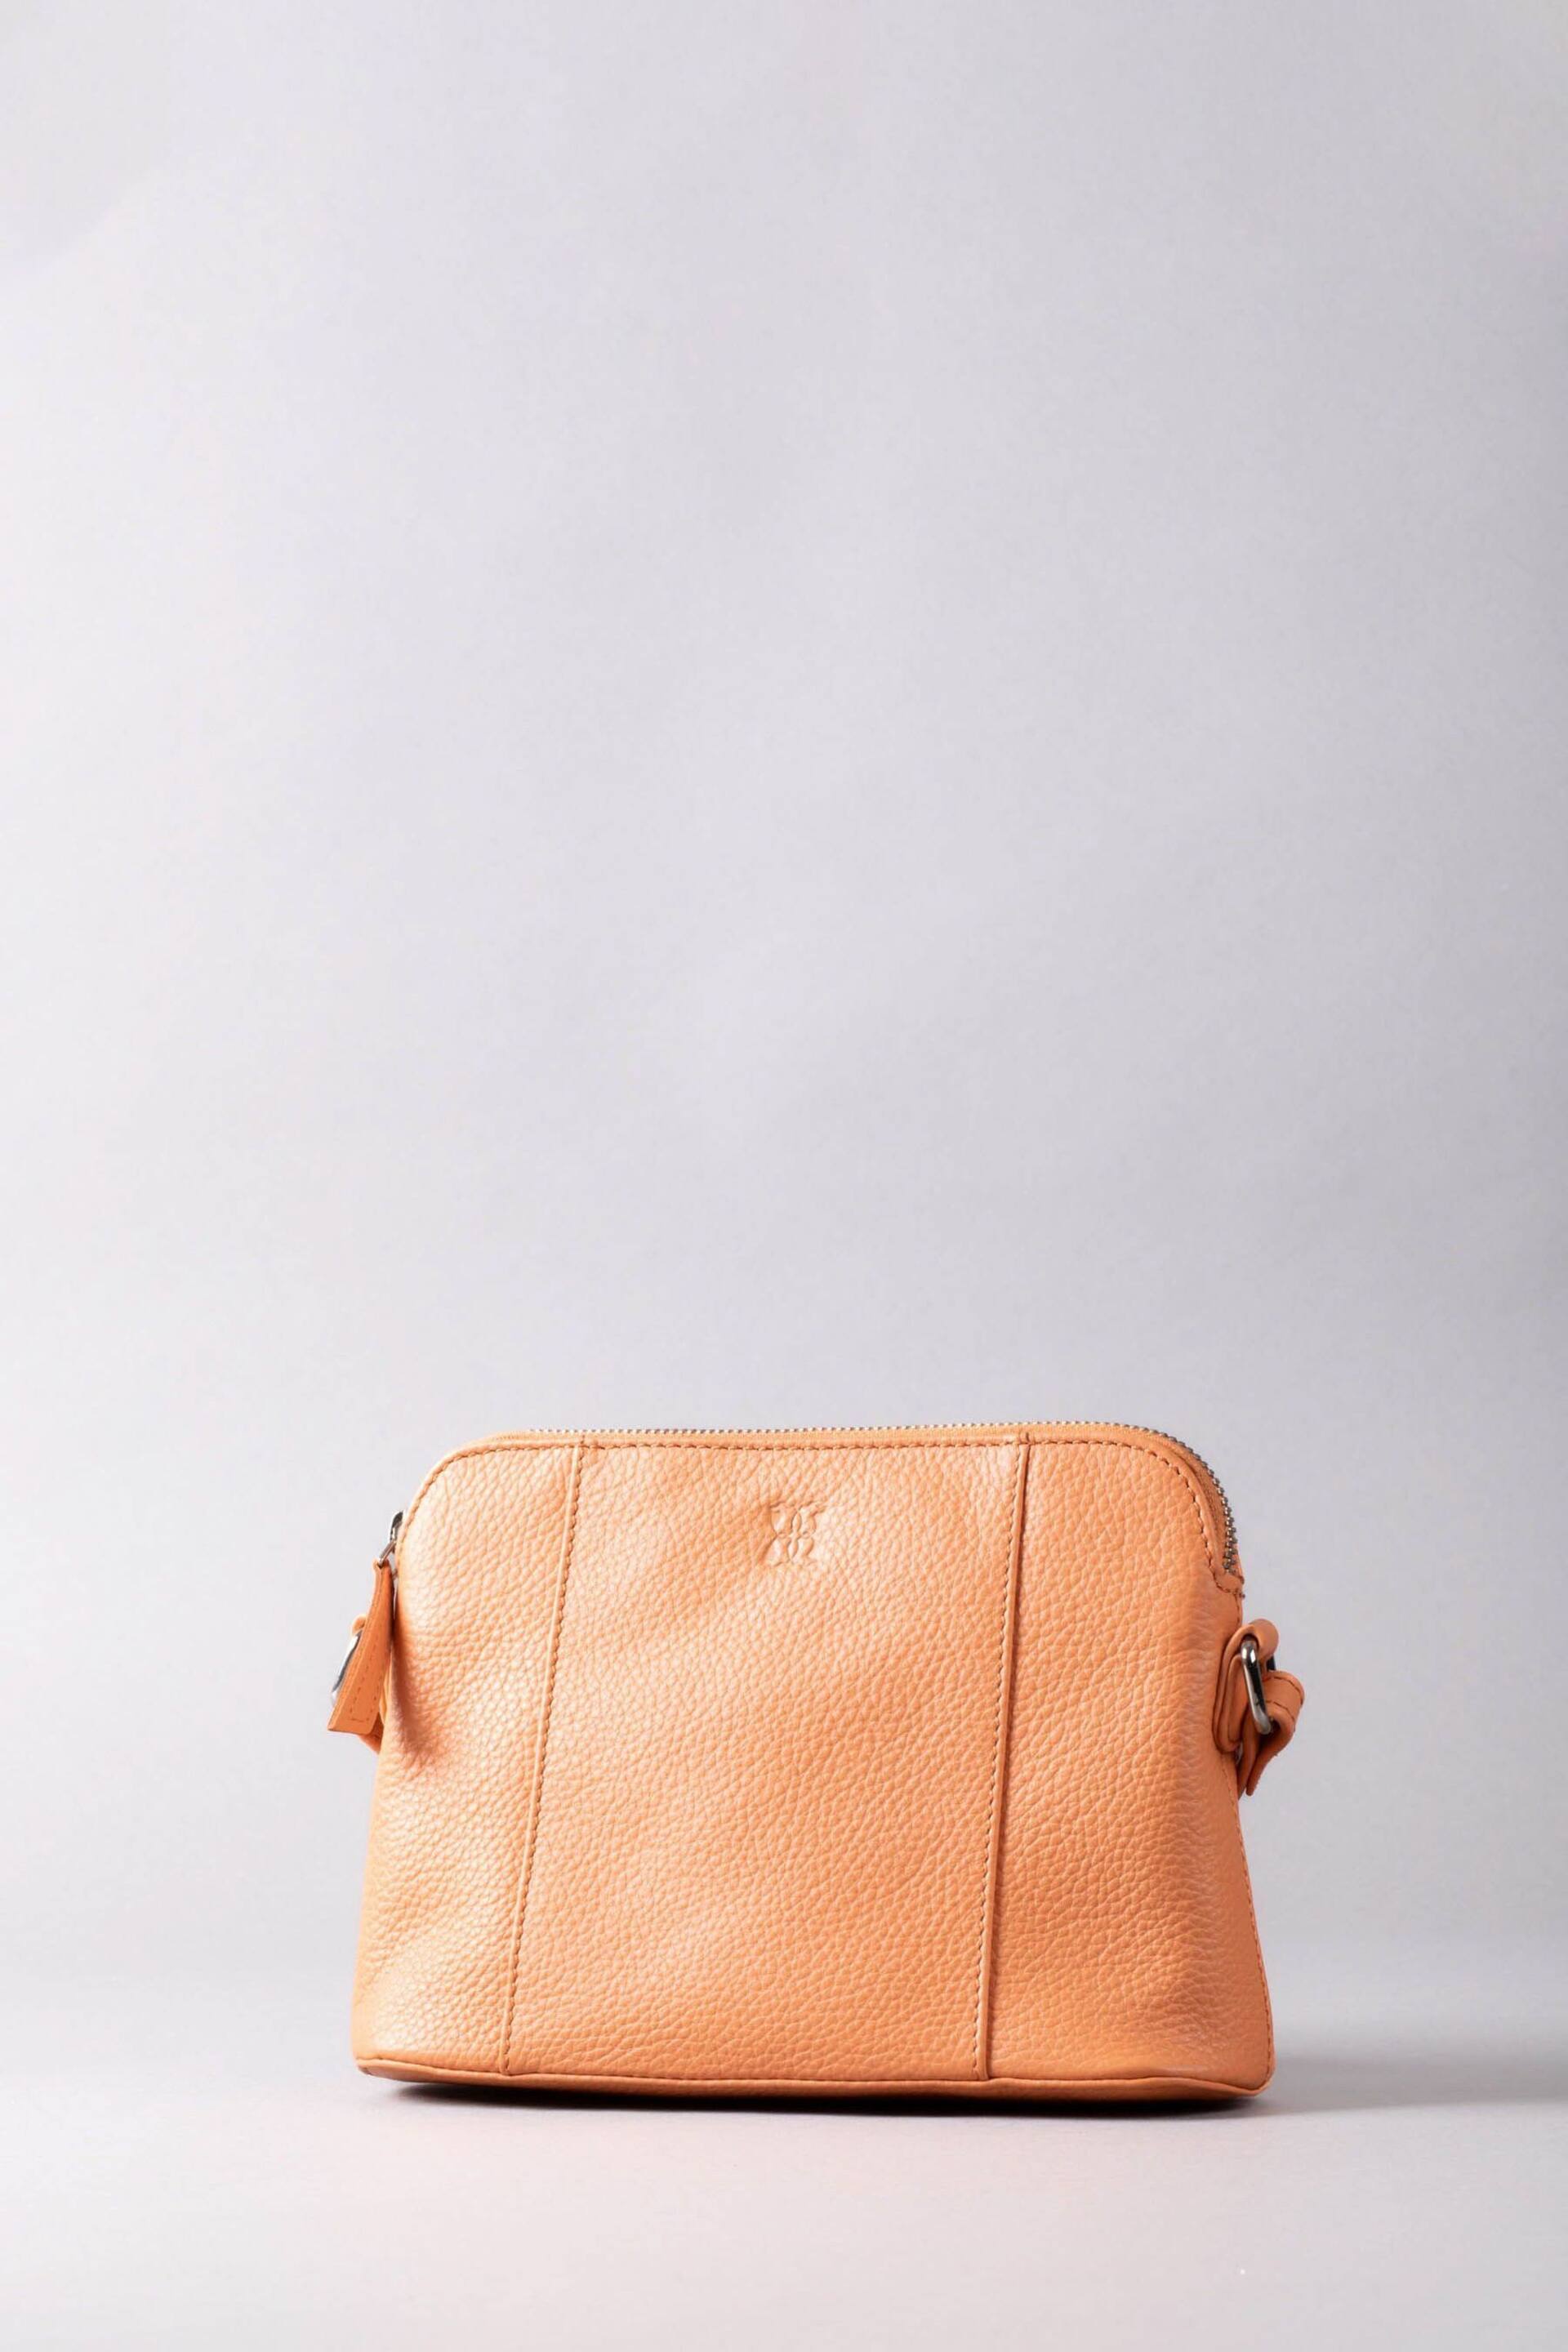 Lakeland Leather Orange Alston Curved Leather Cross-Body Bag - Image 1 of 6